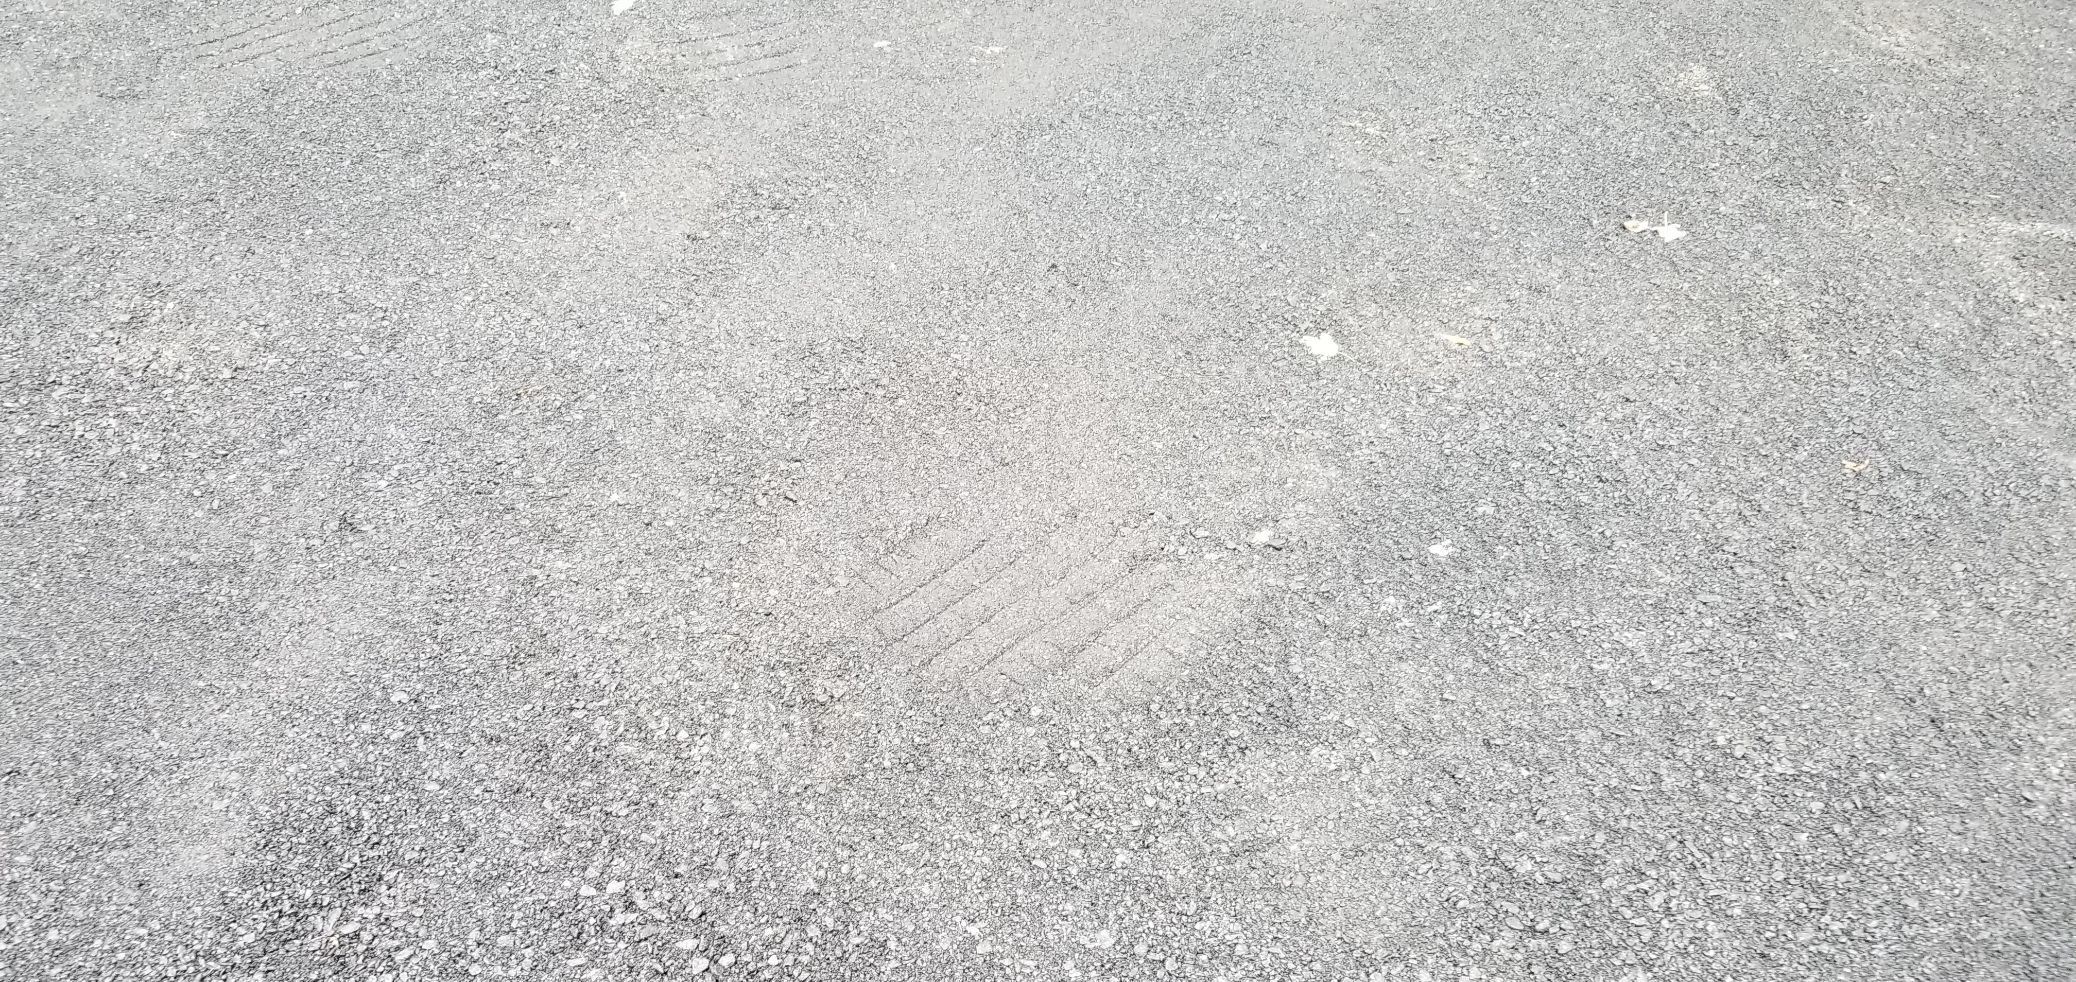 Potholes loose gravel